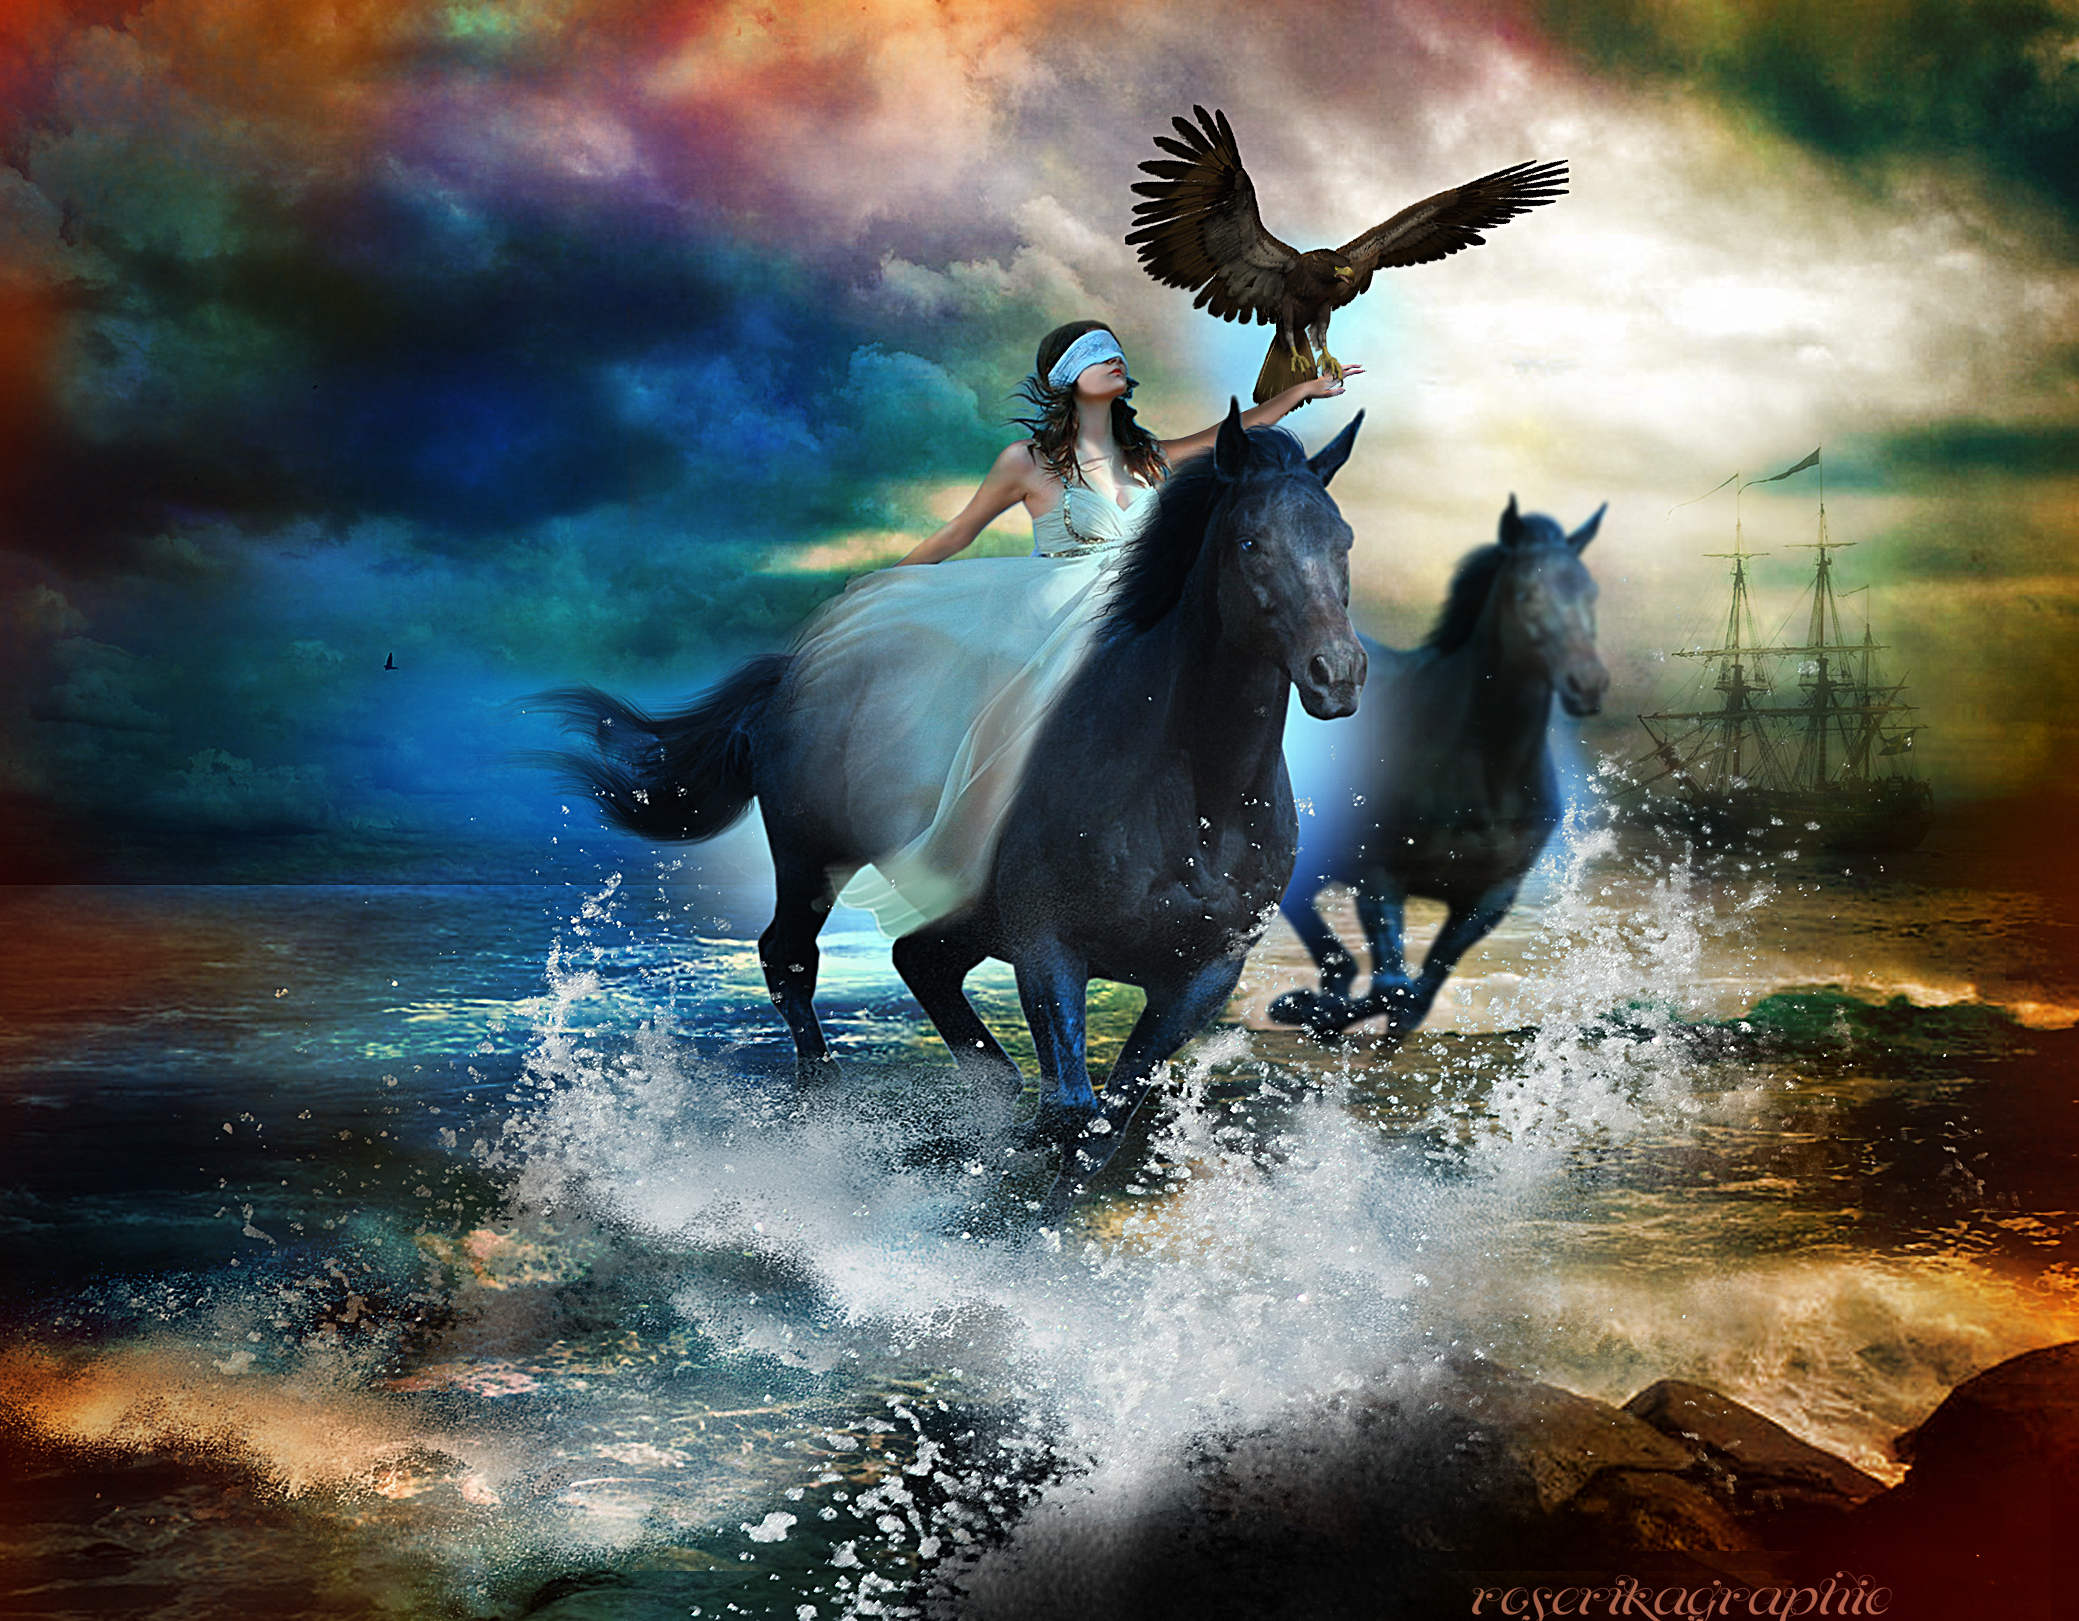 Bird Blindfold Boat Fantasy Horse Ocean Woman 2079x1621